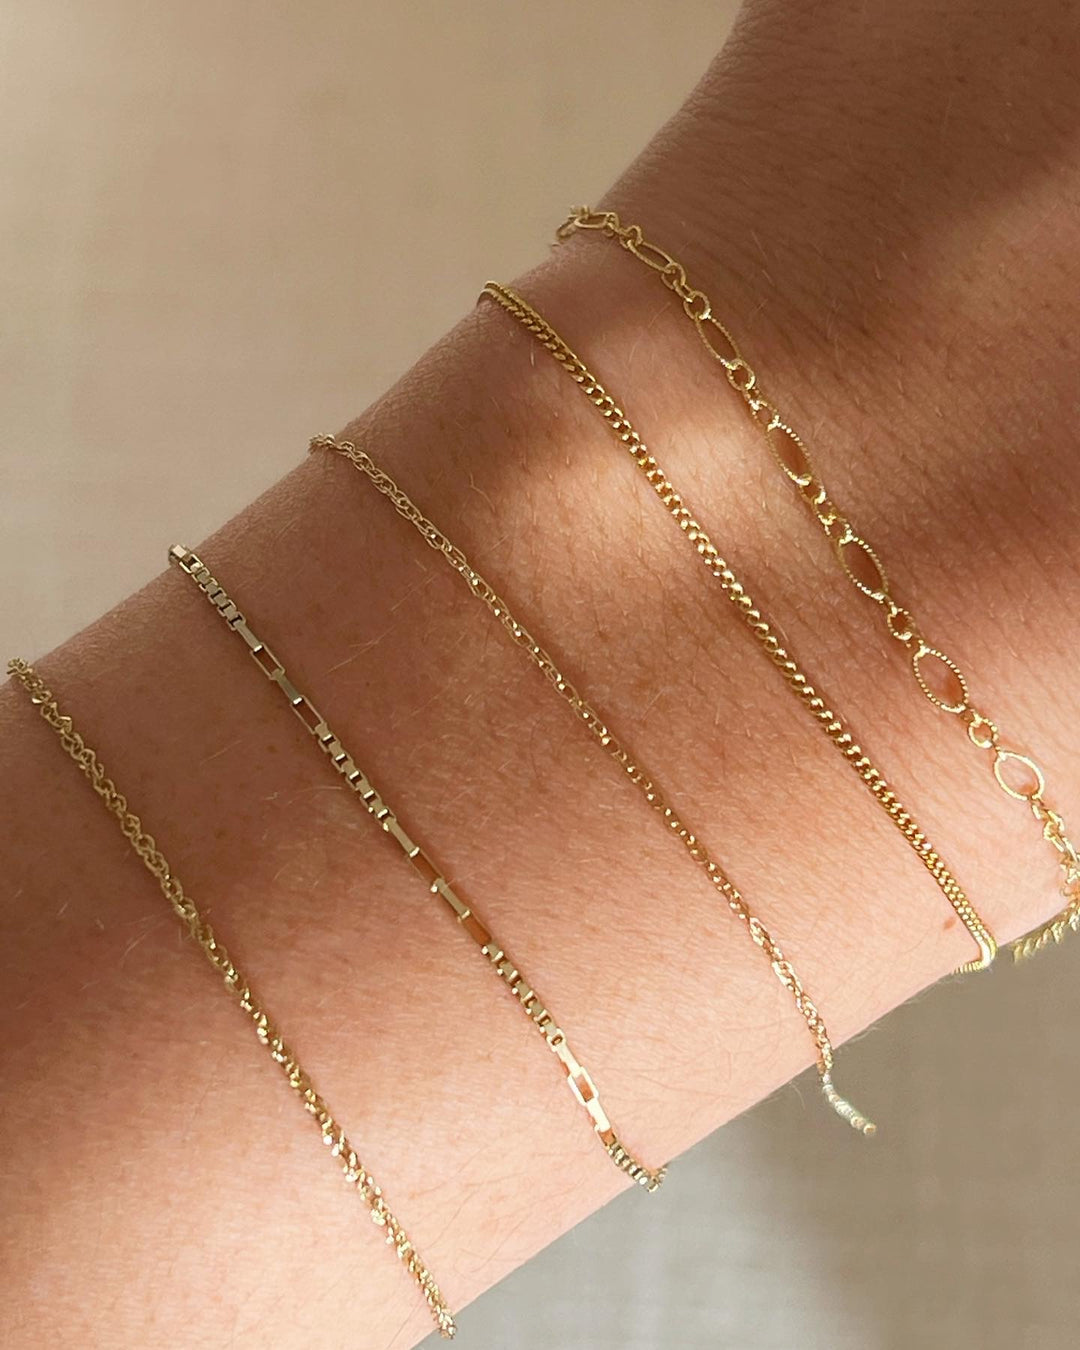 Permanent Jewelry 14K Goldfill Chain Bracelet - Rope